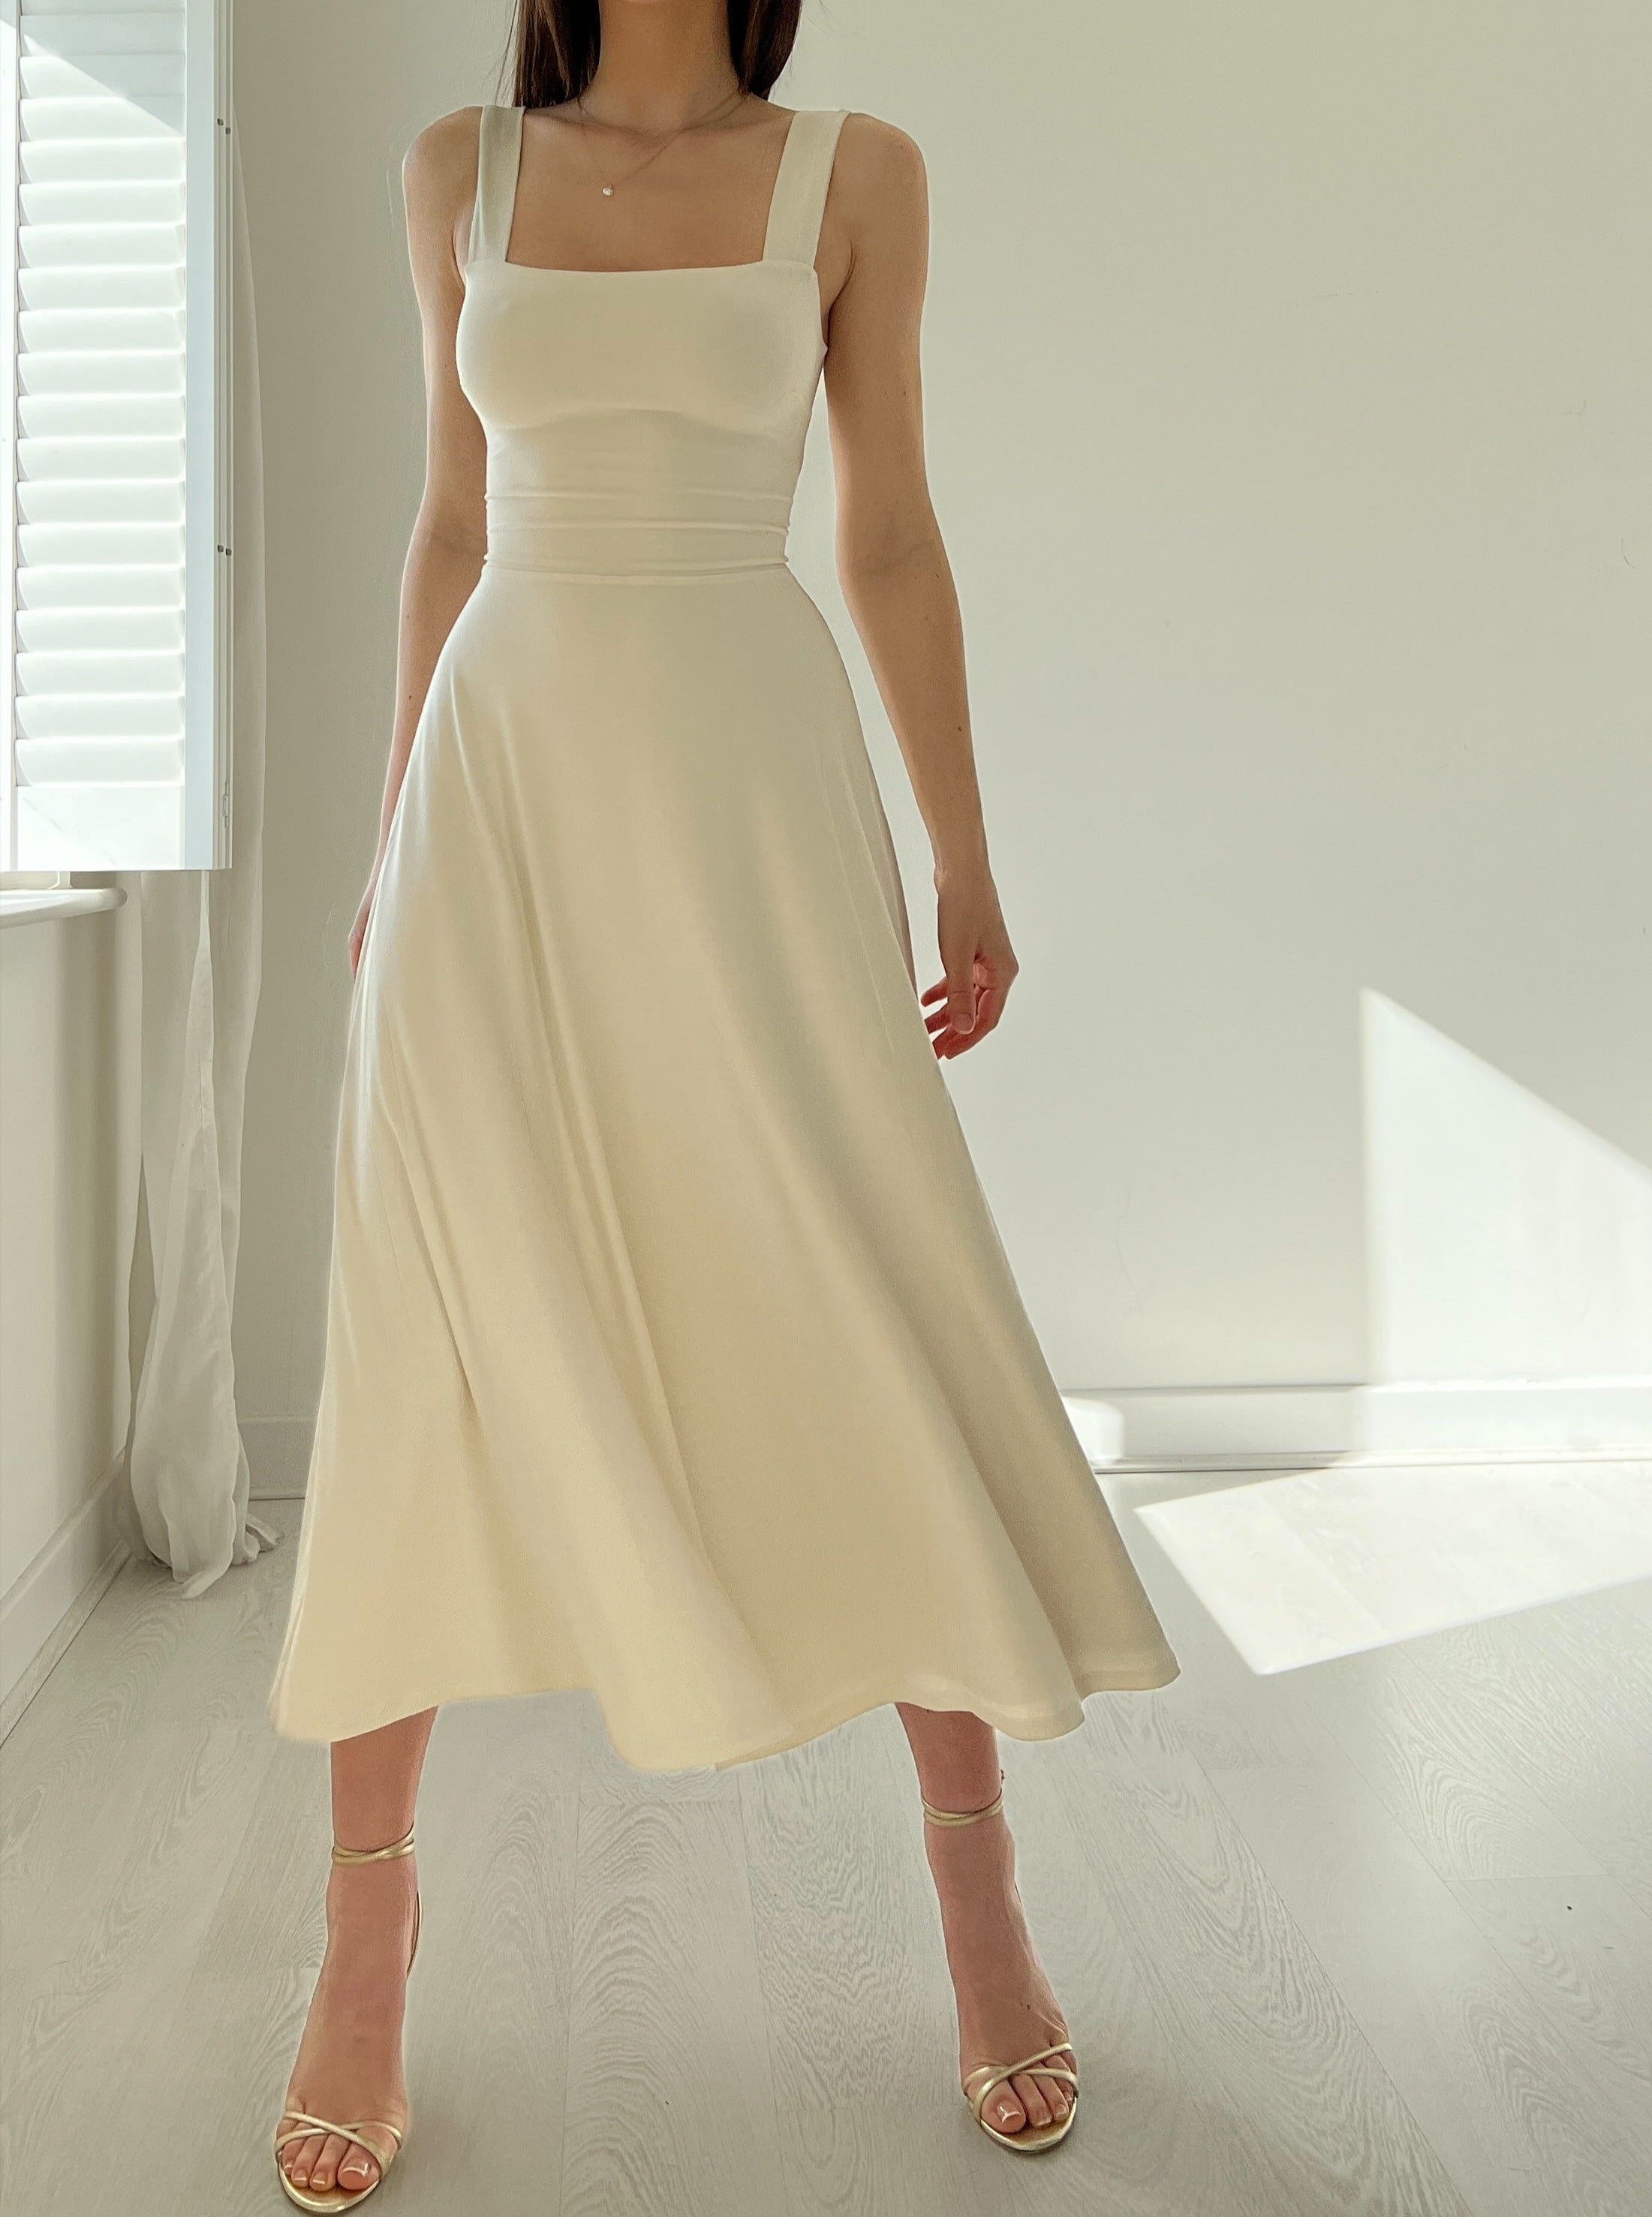 midi length dress